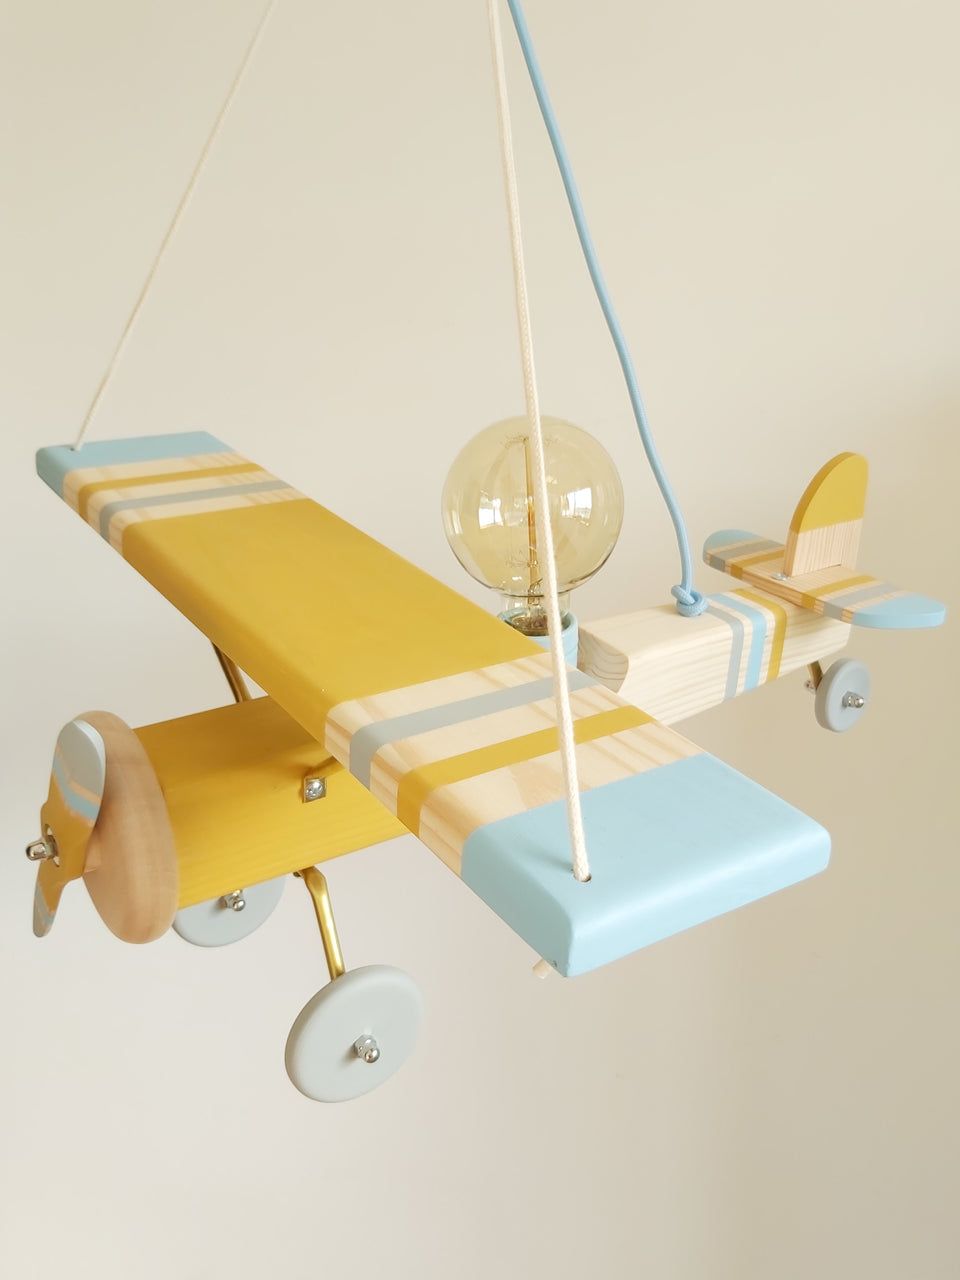 Candeeiro Avião Tecto Mostarda - Ceiling wood Airplane Lamp Mustard